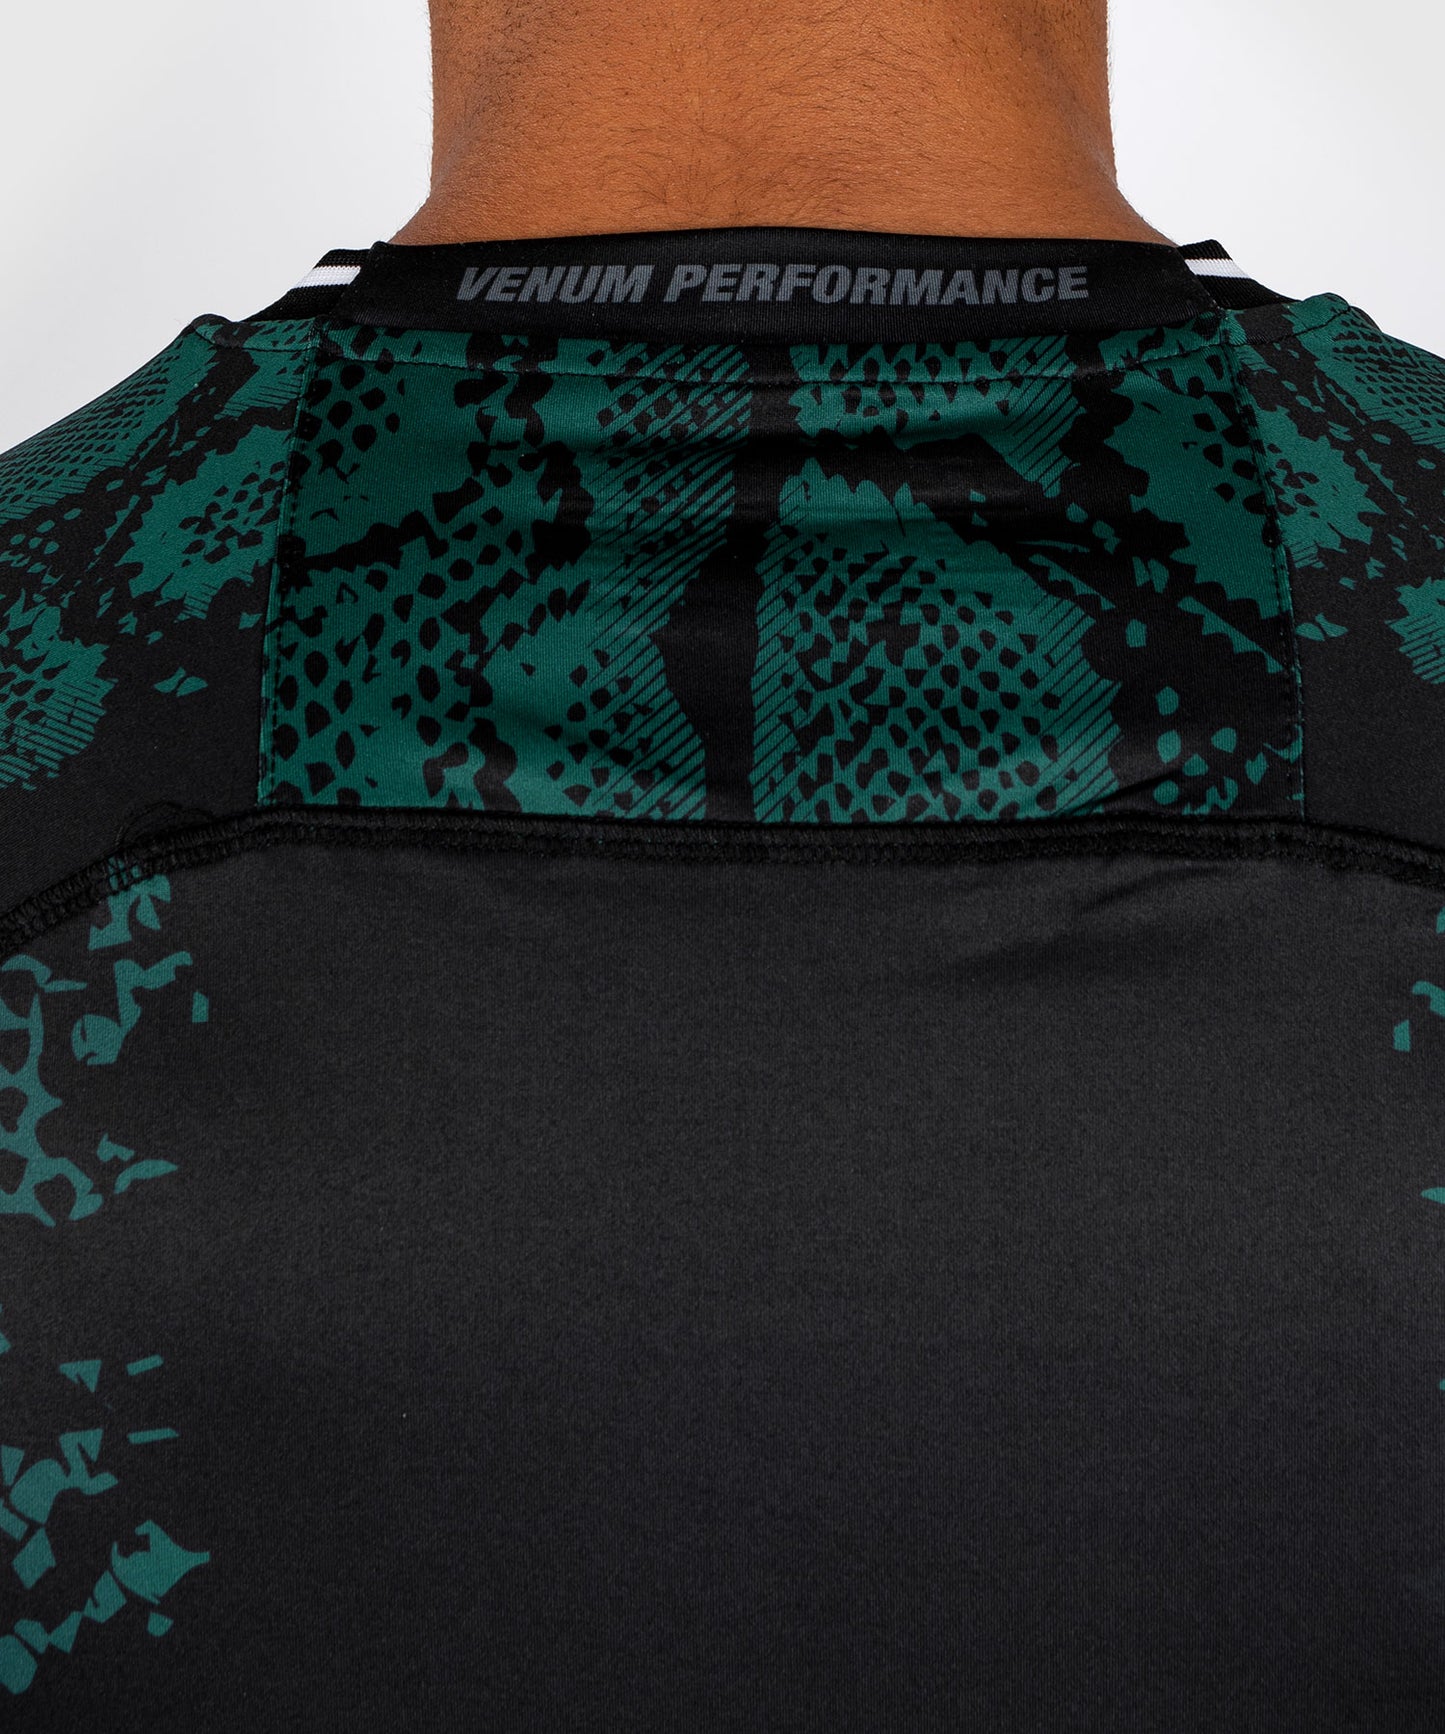 UFC Adrenaline by Venum Authentic Fight Night Camiseta Jersey - Emerald Edition - Verde/Negro